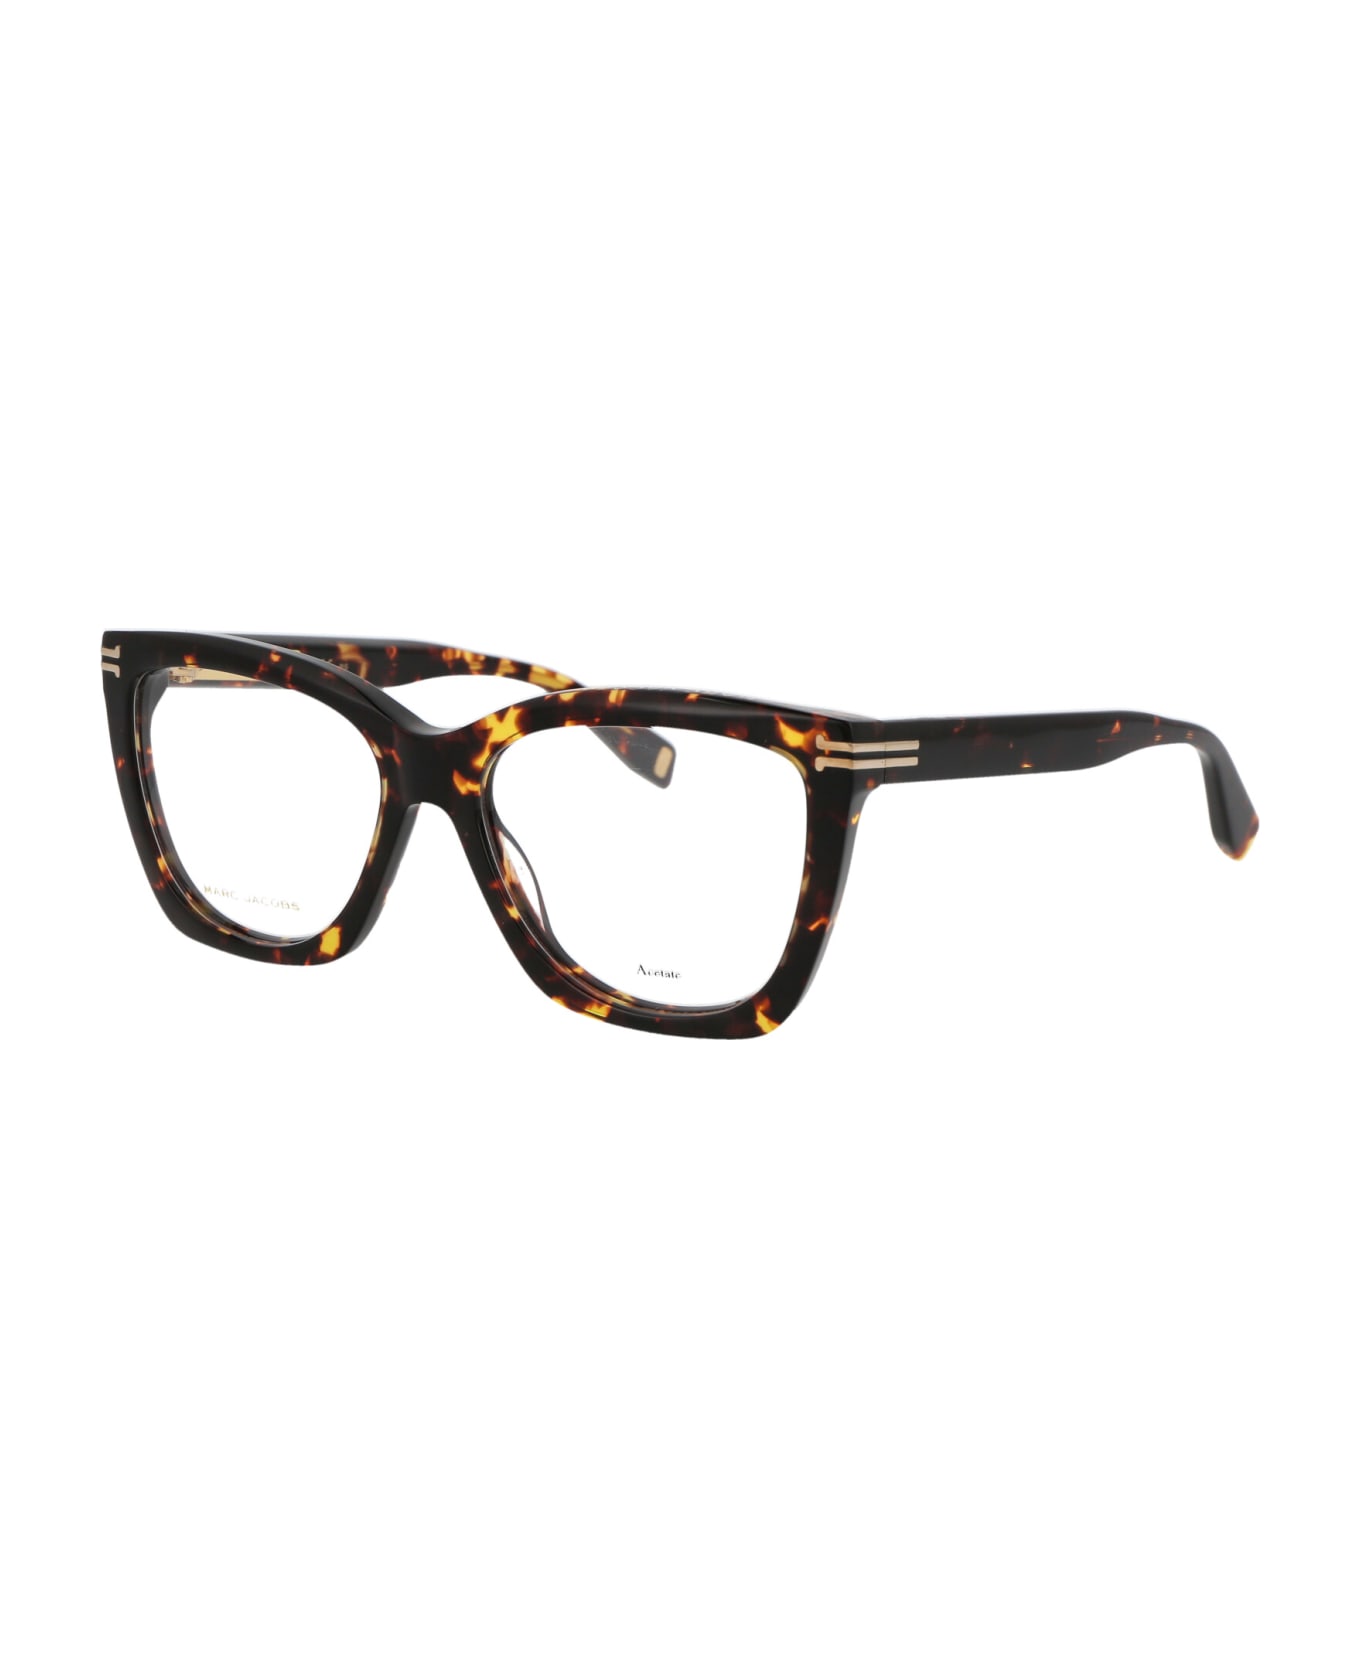 Marc Jacobs Eyewear Mj 1014 Glasses - 086 HAVANA